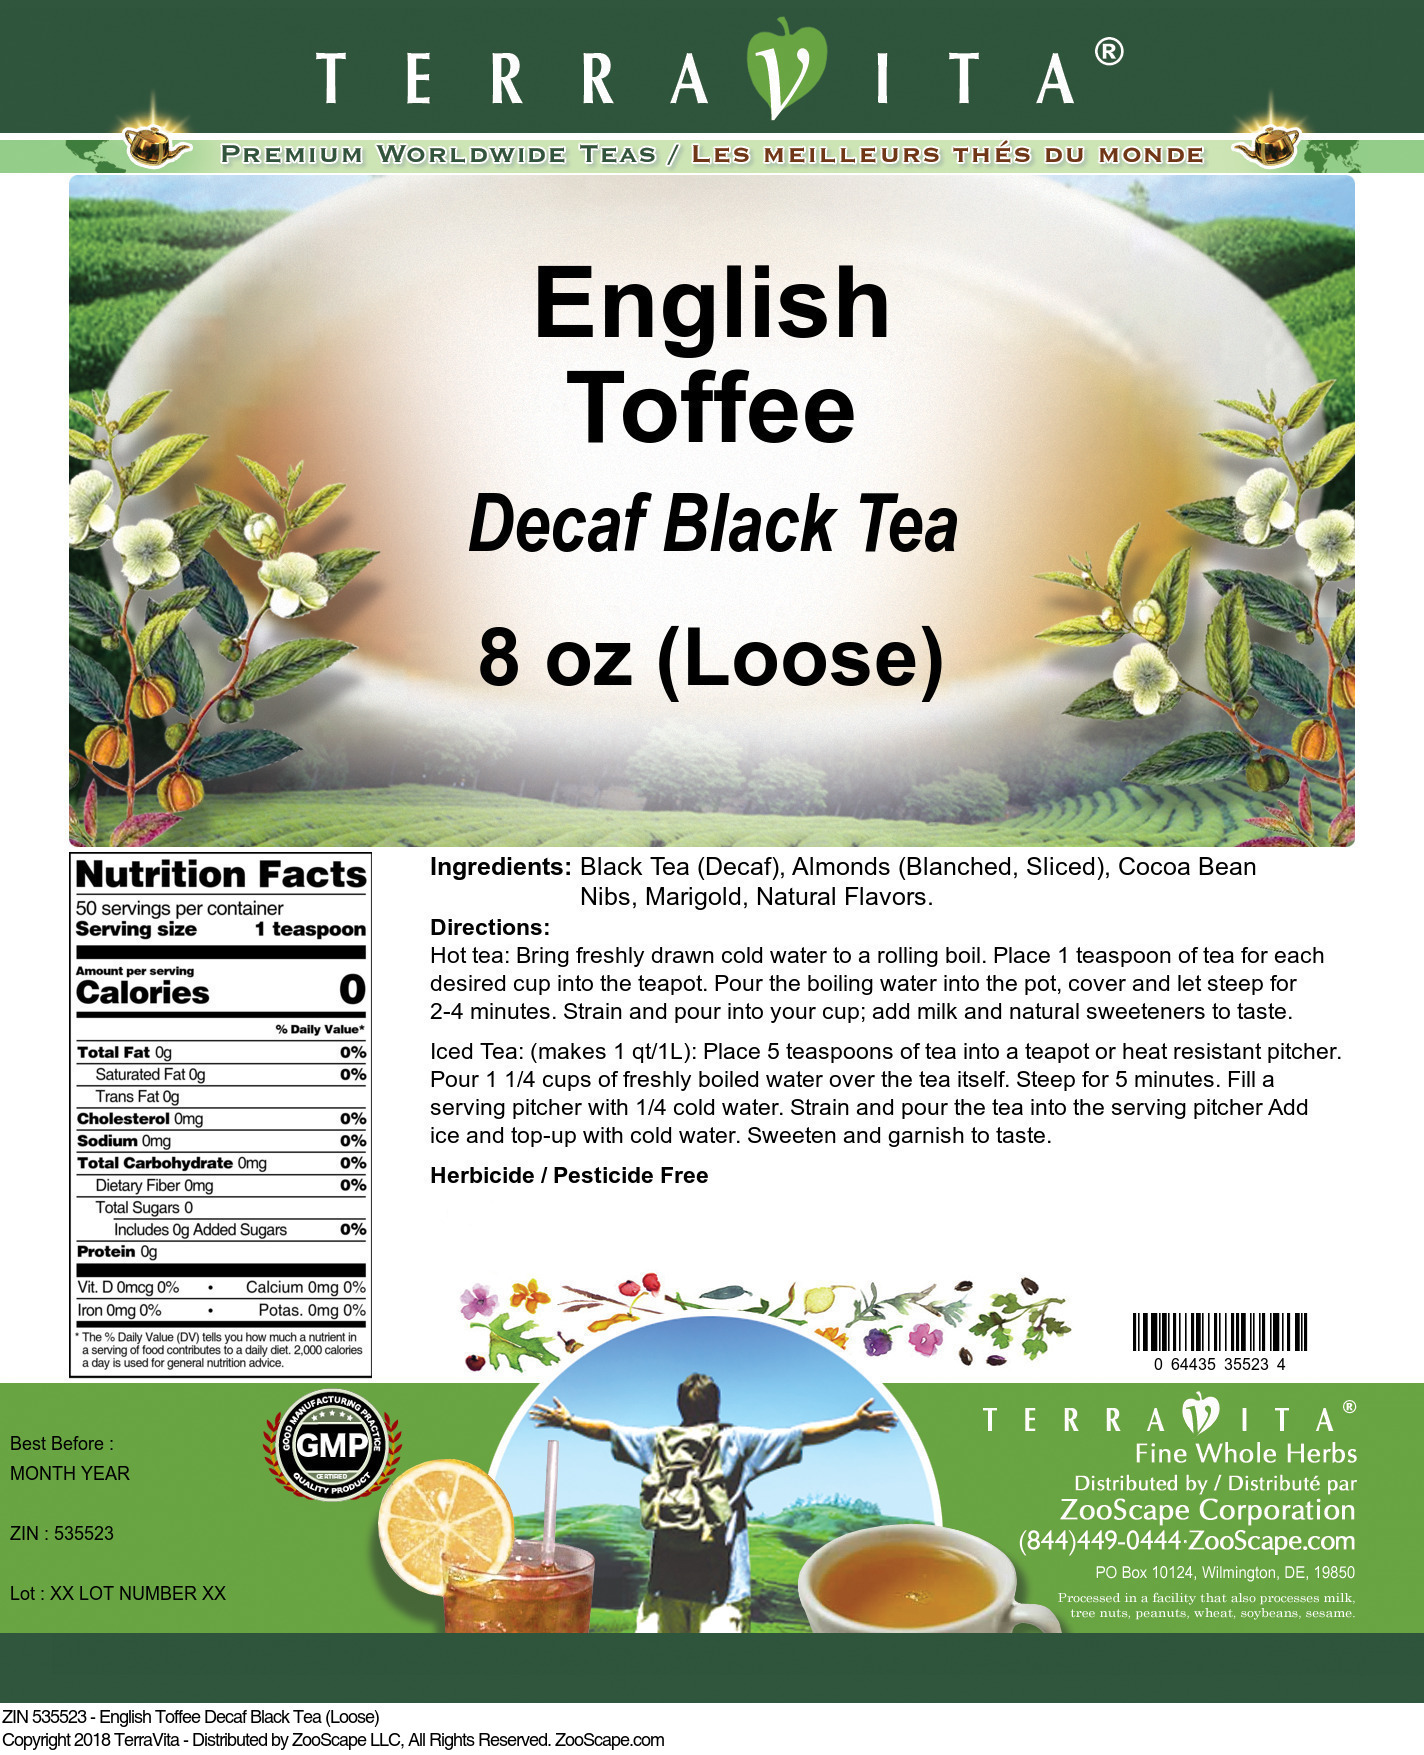 English Toffee Decaf Black Tea (Loose) - Label